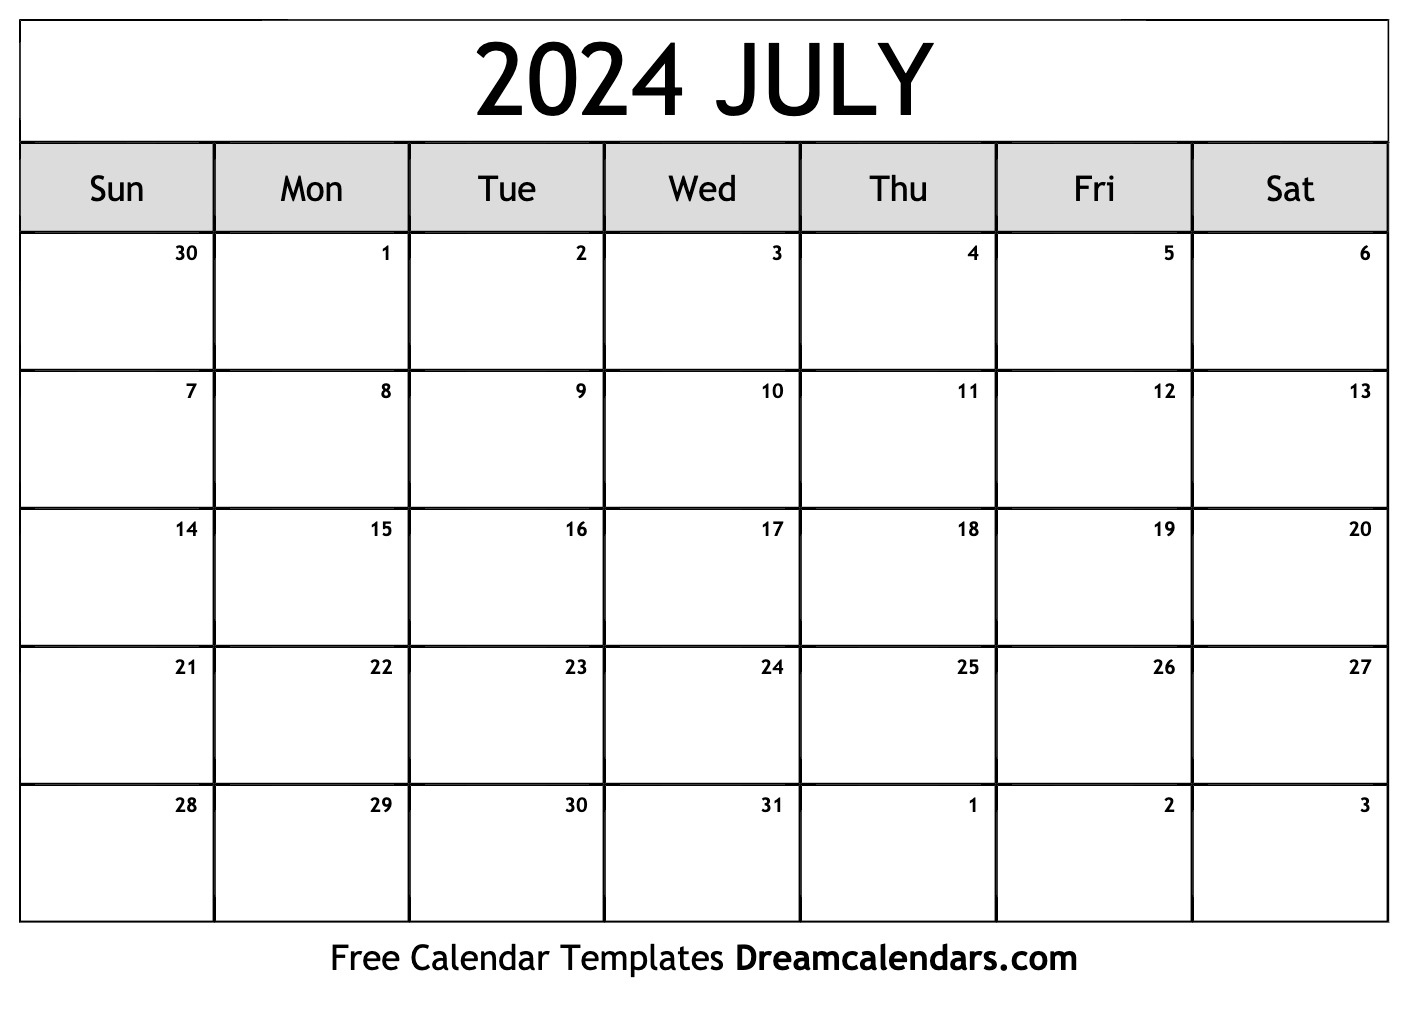 July 2024 Calendar | Free Blank Printable With Holidays | Printable Calendar 2024 July